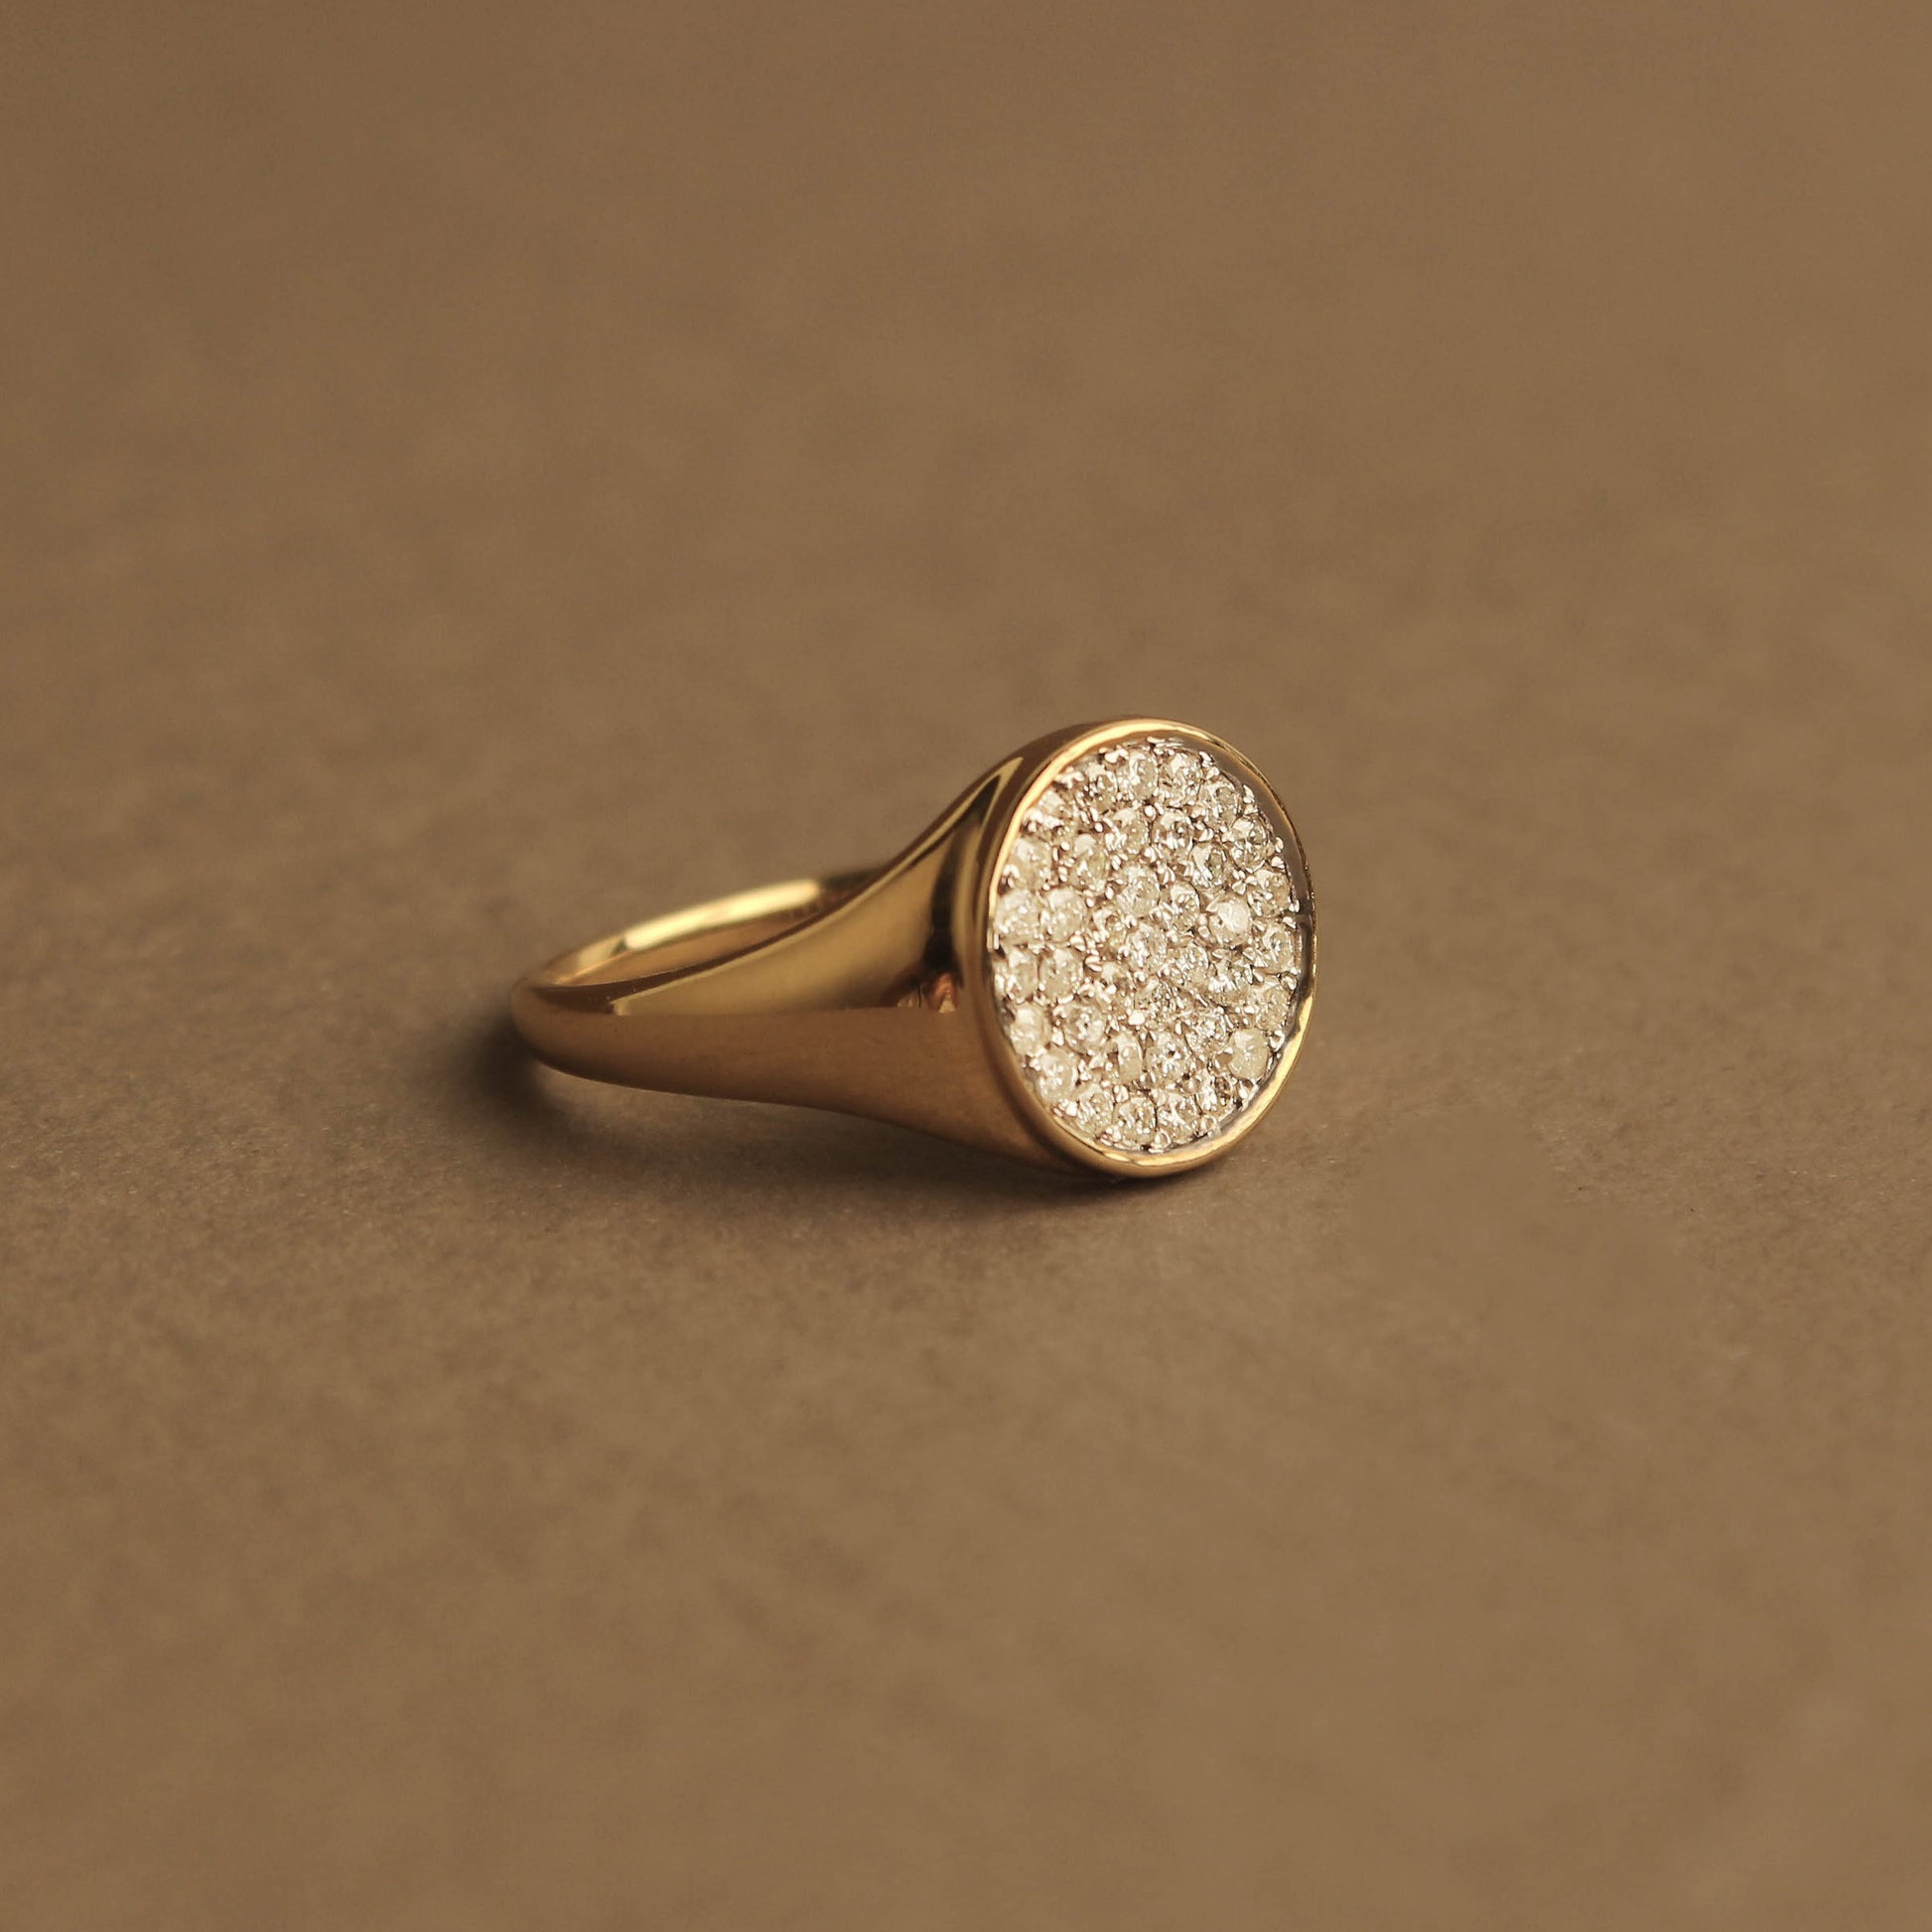 Buy Men's Concave Style Pave Diamond Statement Signet Ring in Platinum